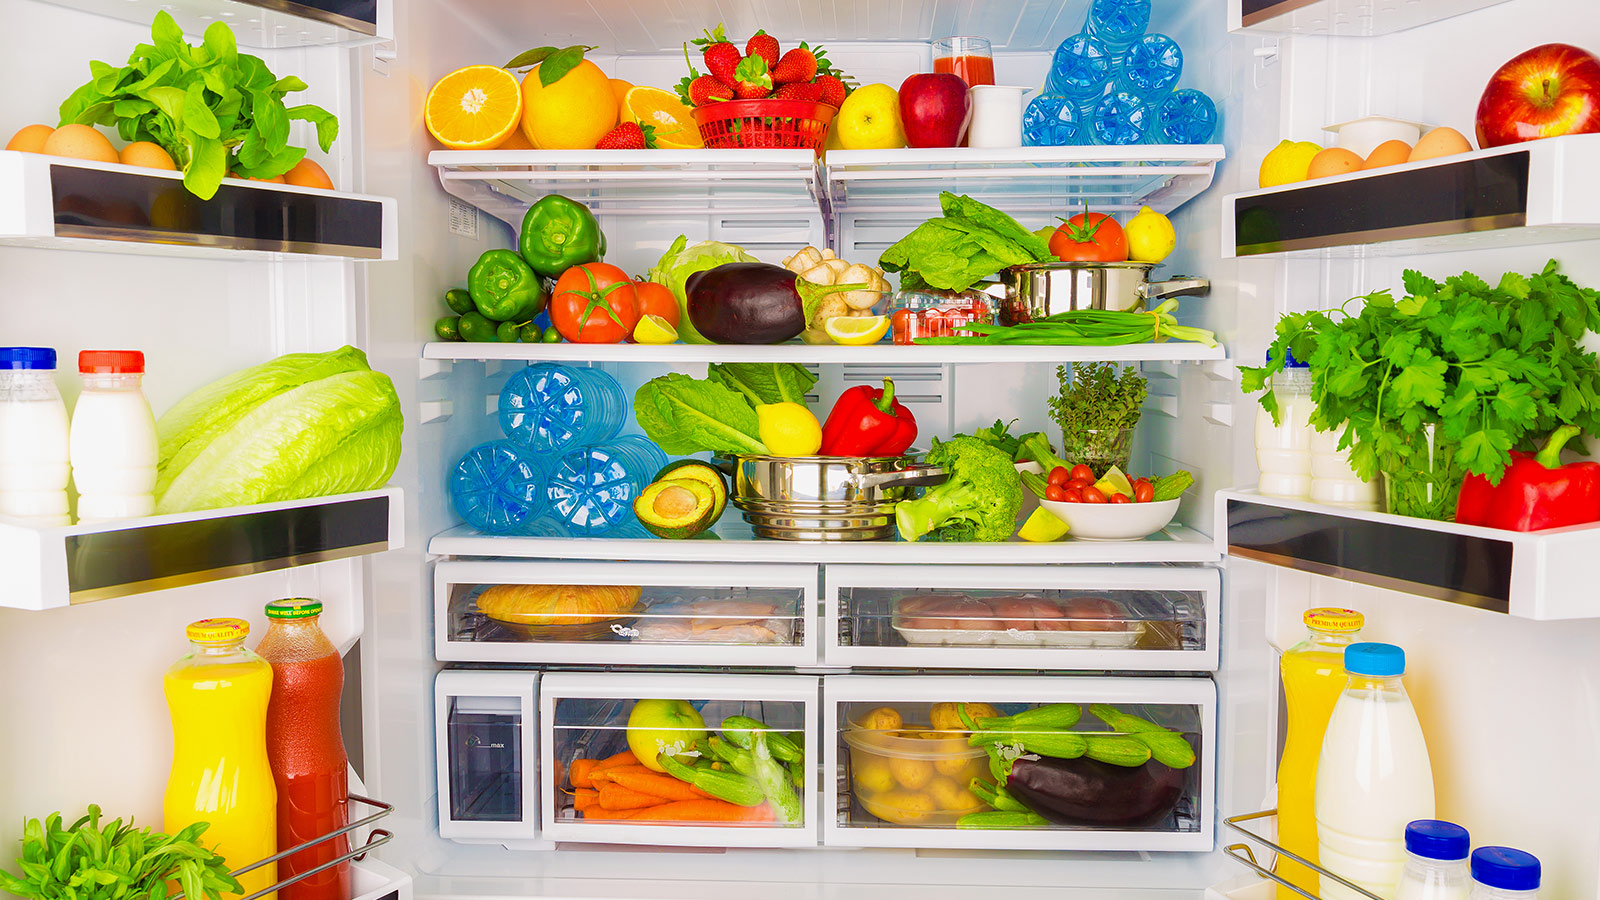 Interior of refrigerator